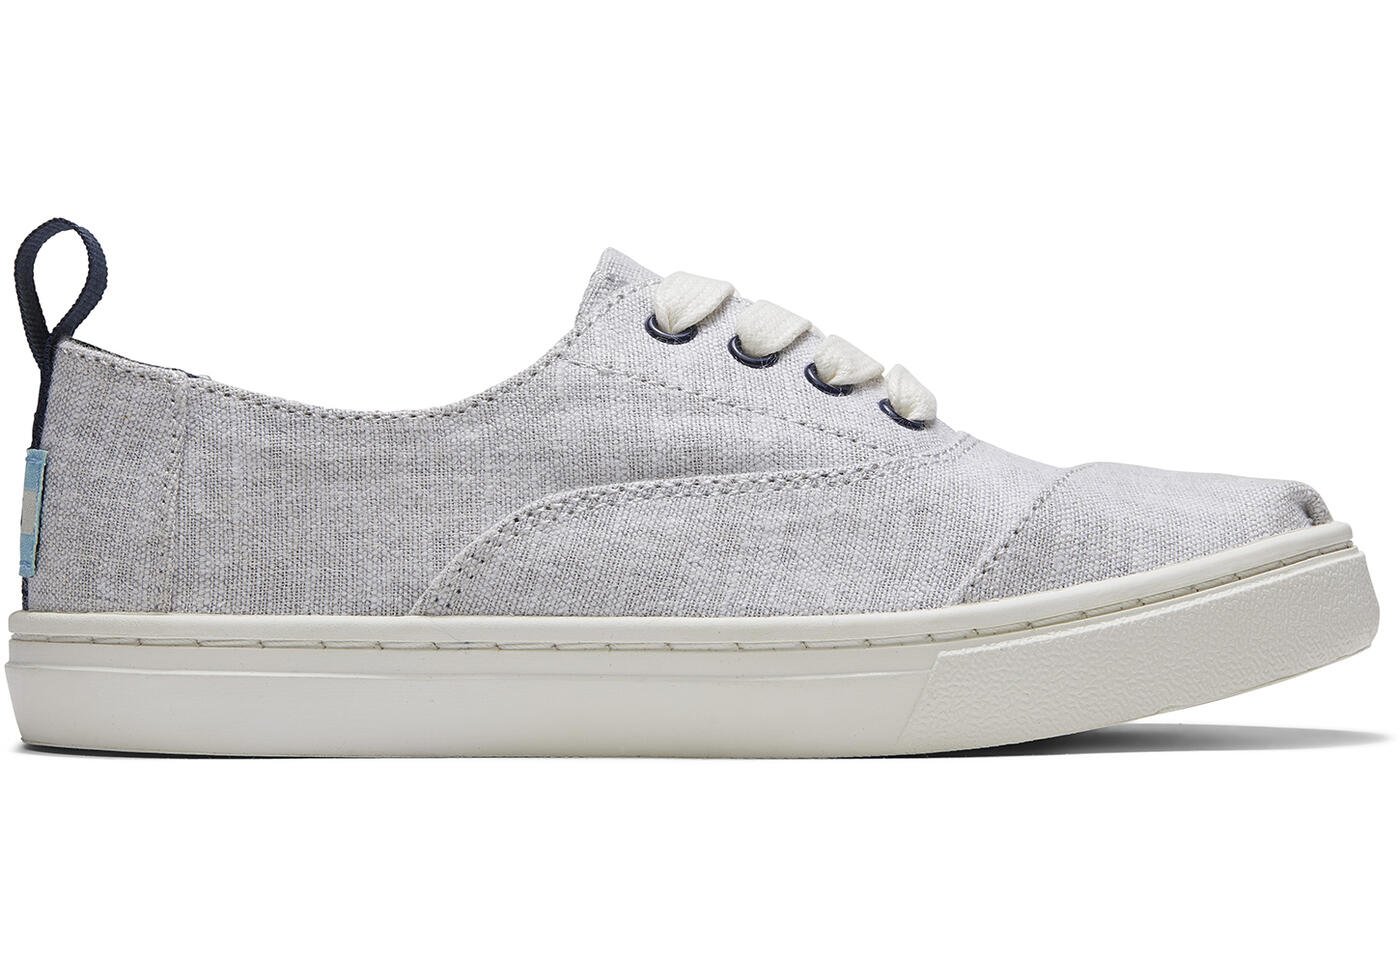 Youth Grey Cordones Sneaker - Toms